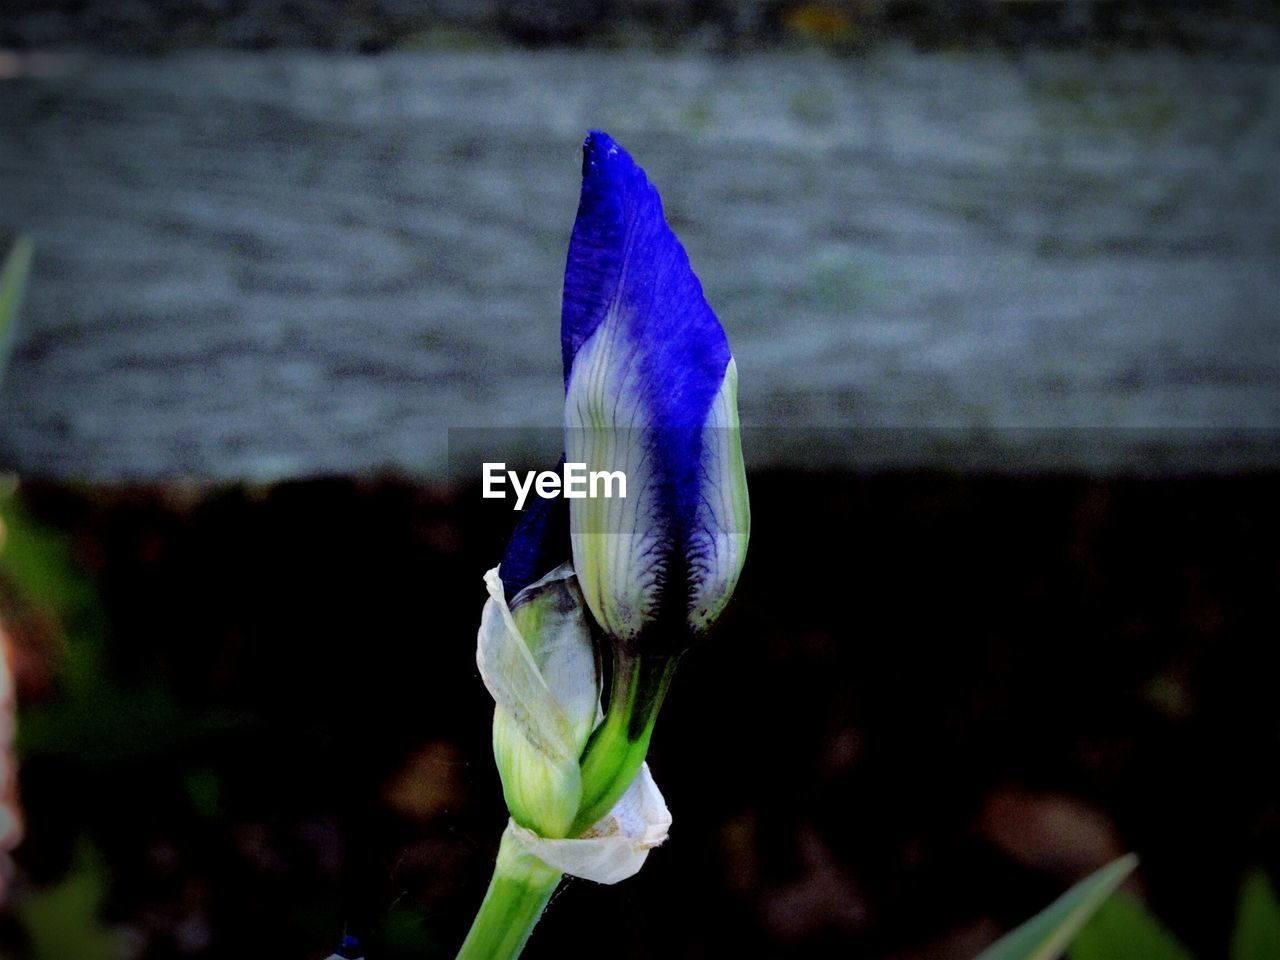 Blue bud blooming in garden